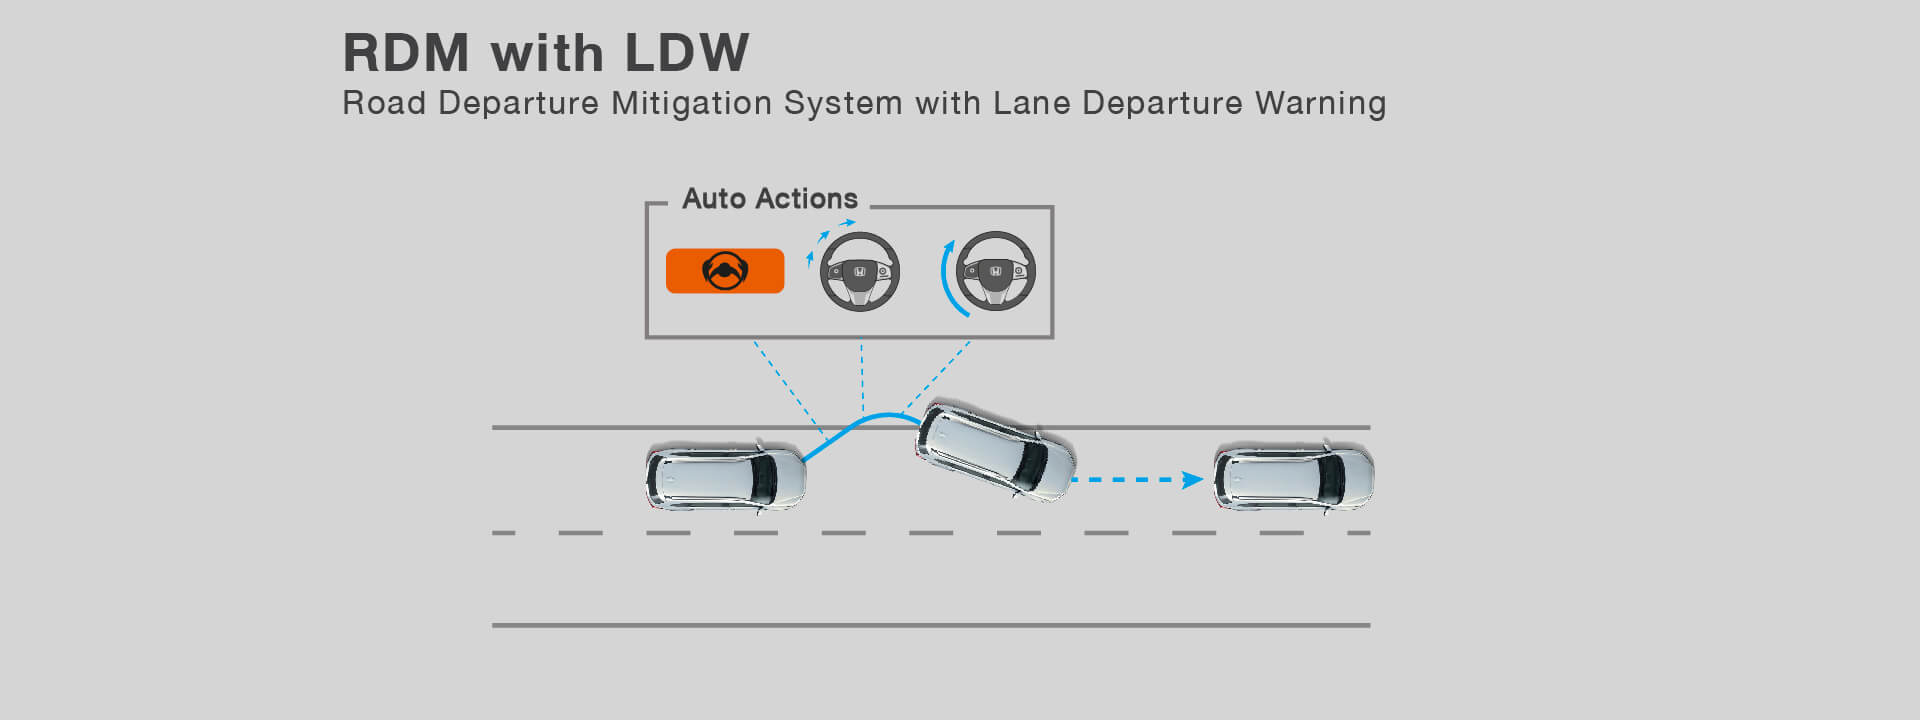 Road Departure Mitigation System with Lane Departure Warning : RDM with LDW ระบบเตือน และช่วยควบคุมเมื่อรถออกนอกช่องทางเดินรถ